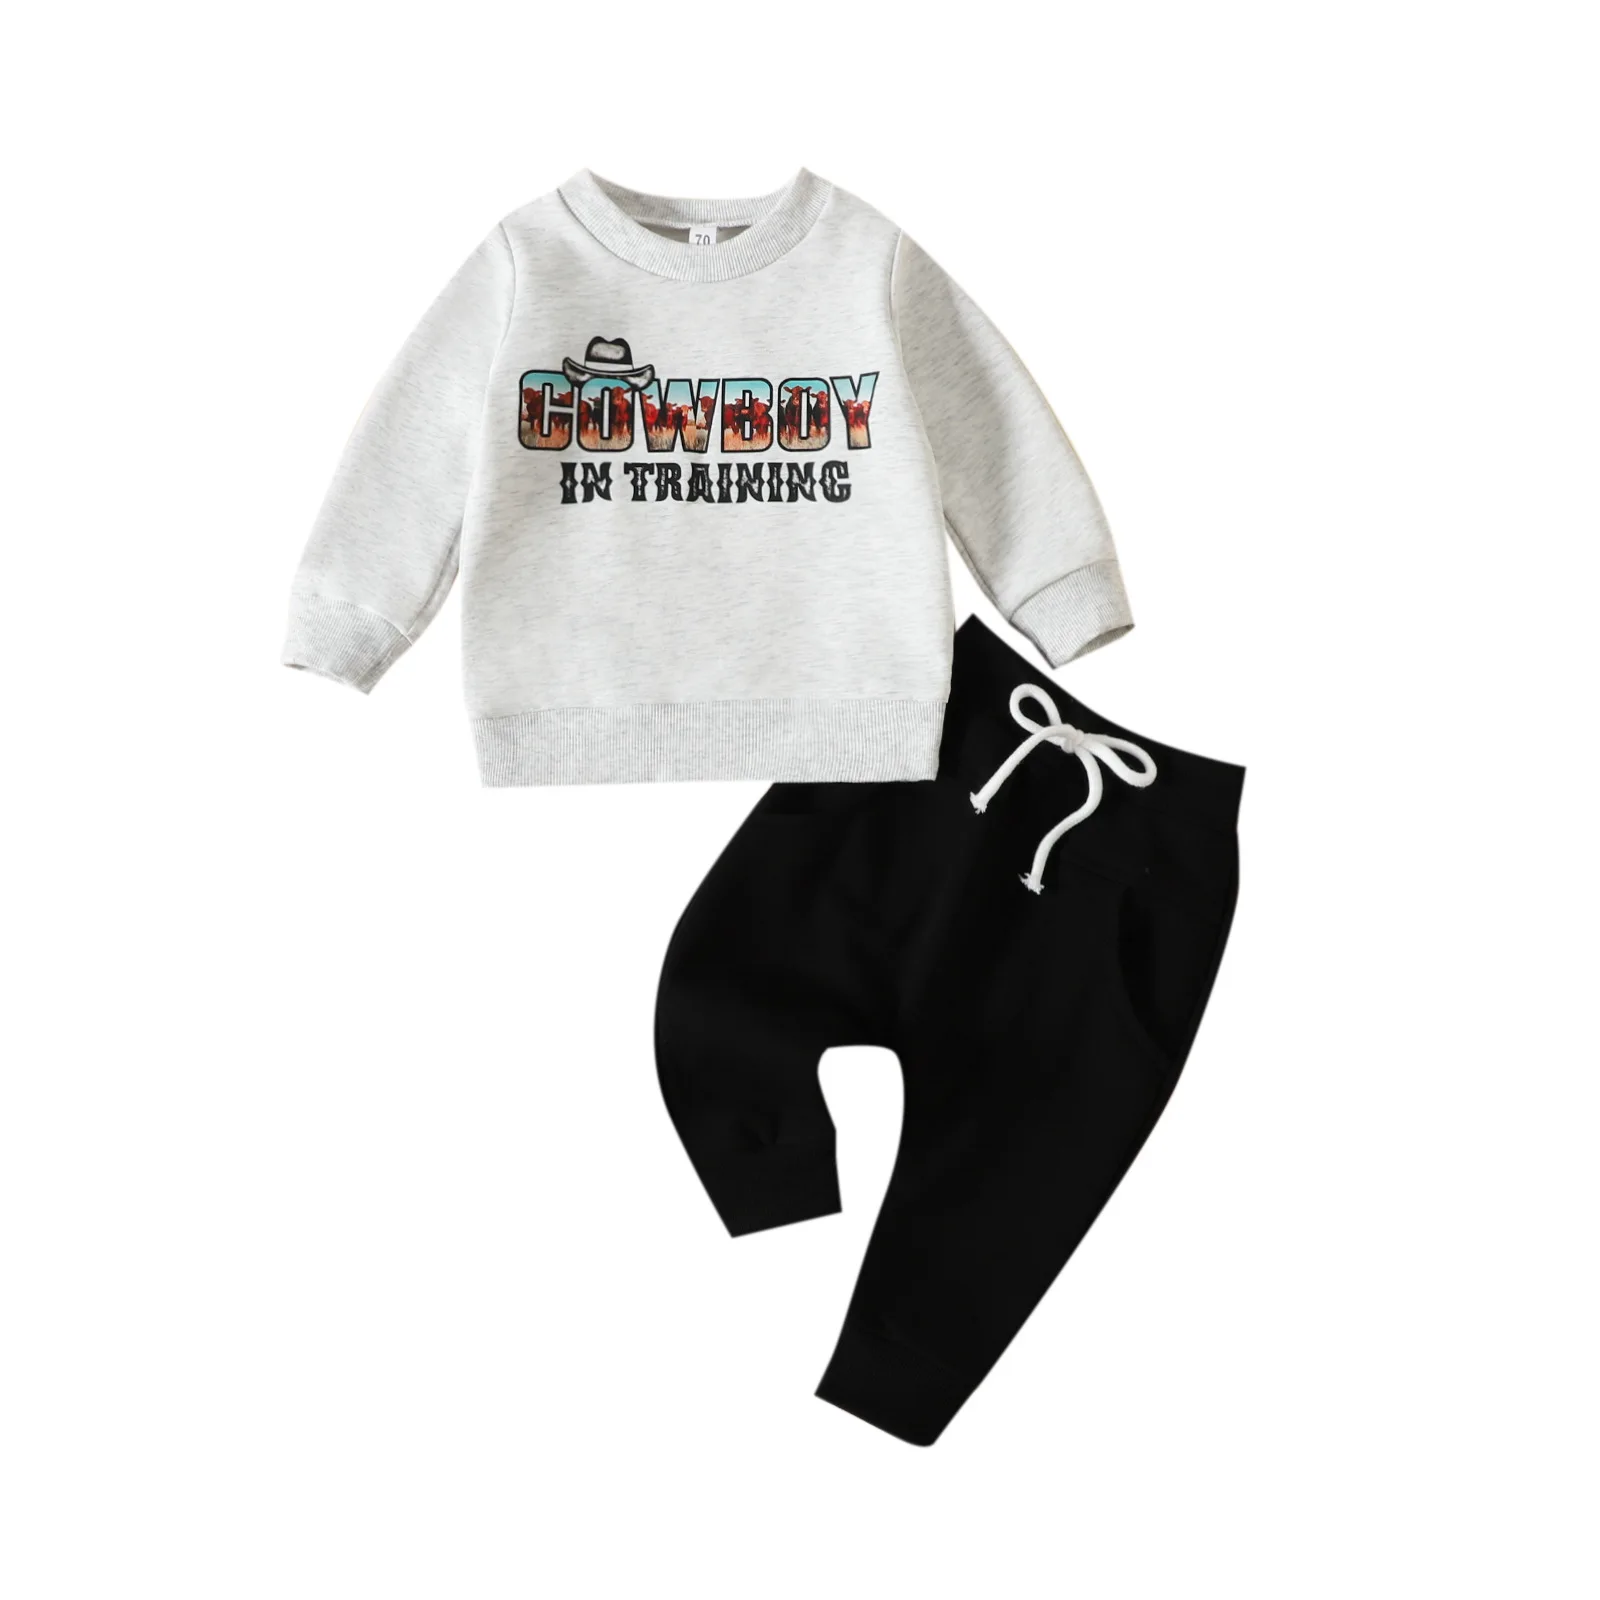 New trendy newborn baby clothes printing boys girls 2pcs clothing sets autumn kids sweatshirt baby jogging sets